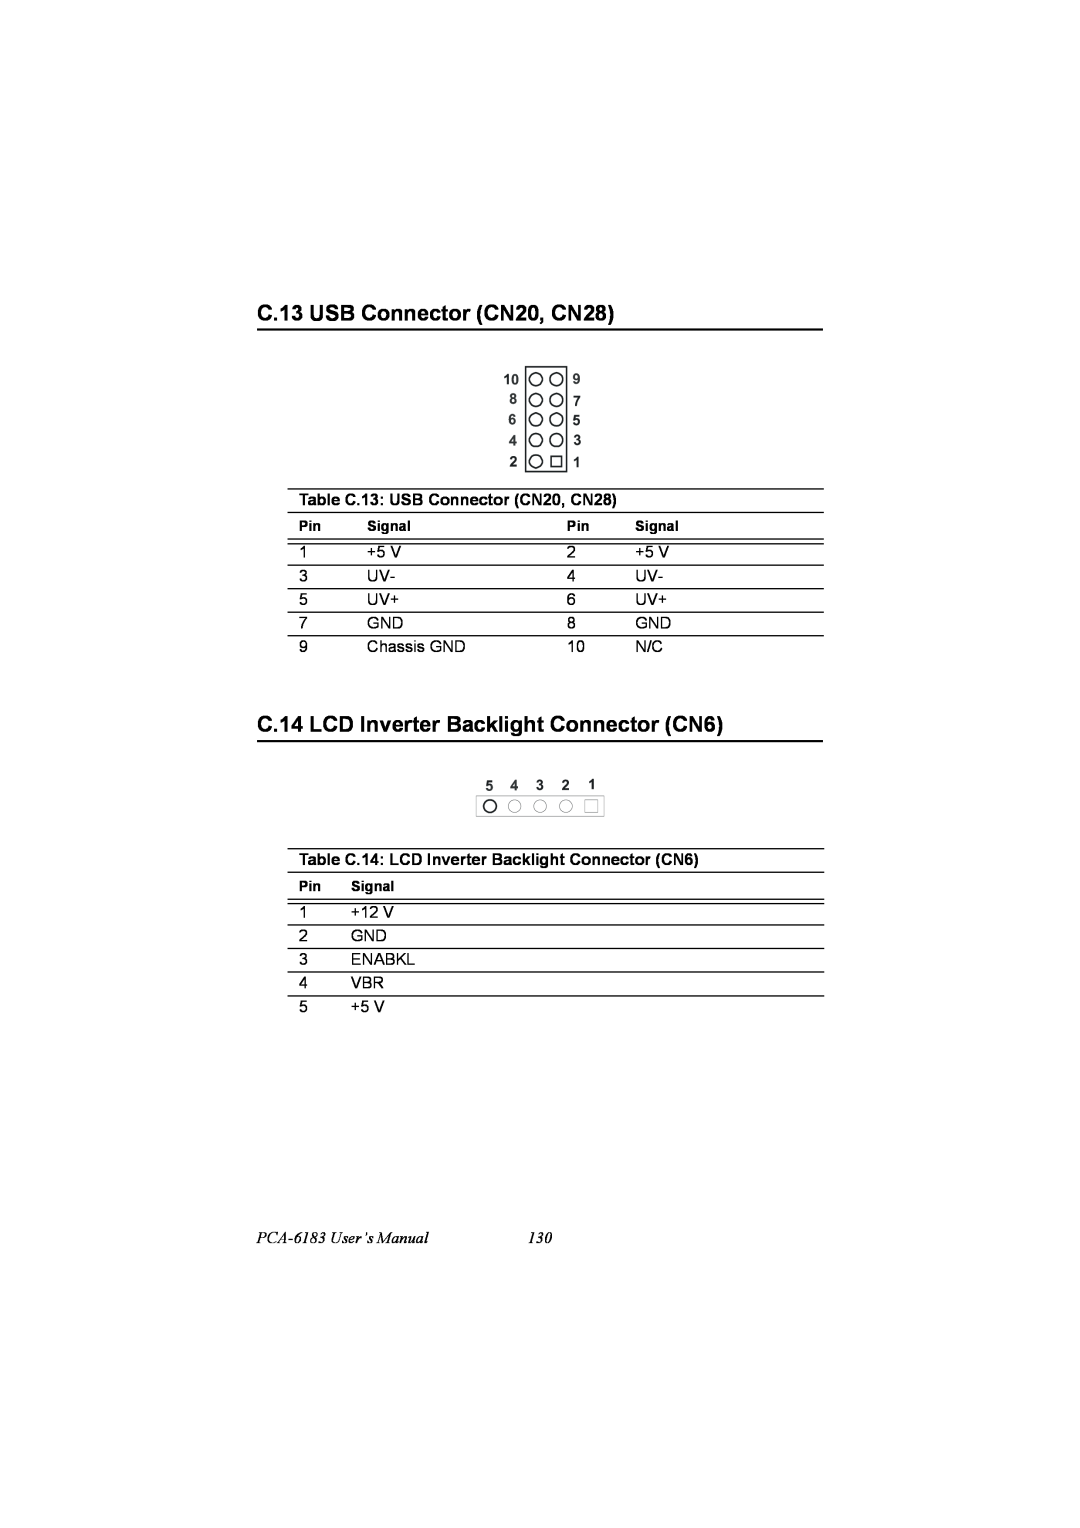 IBM PCM-9575 C.14 LCD Inverter Backlight Connector CN6, Table C.13 USB Connector CN20, CN28, PCA-6183 User’s Manual 